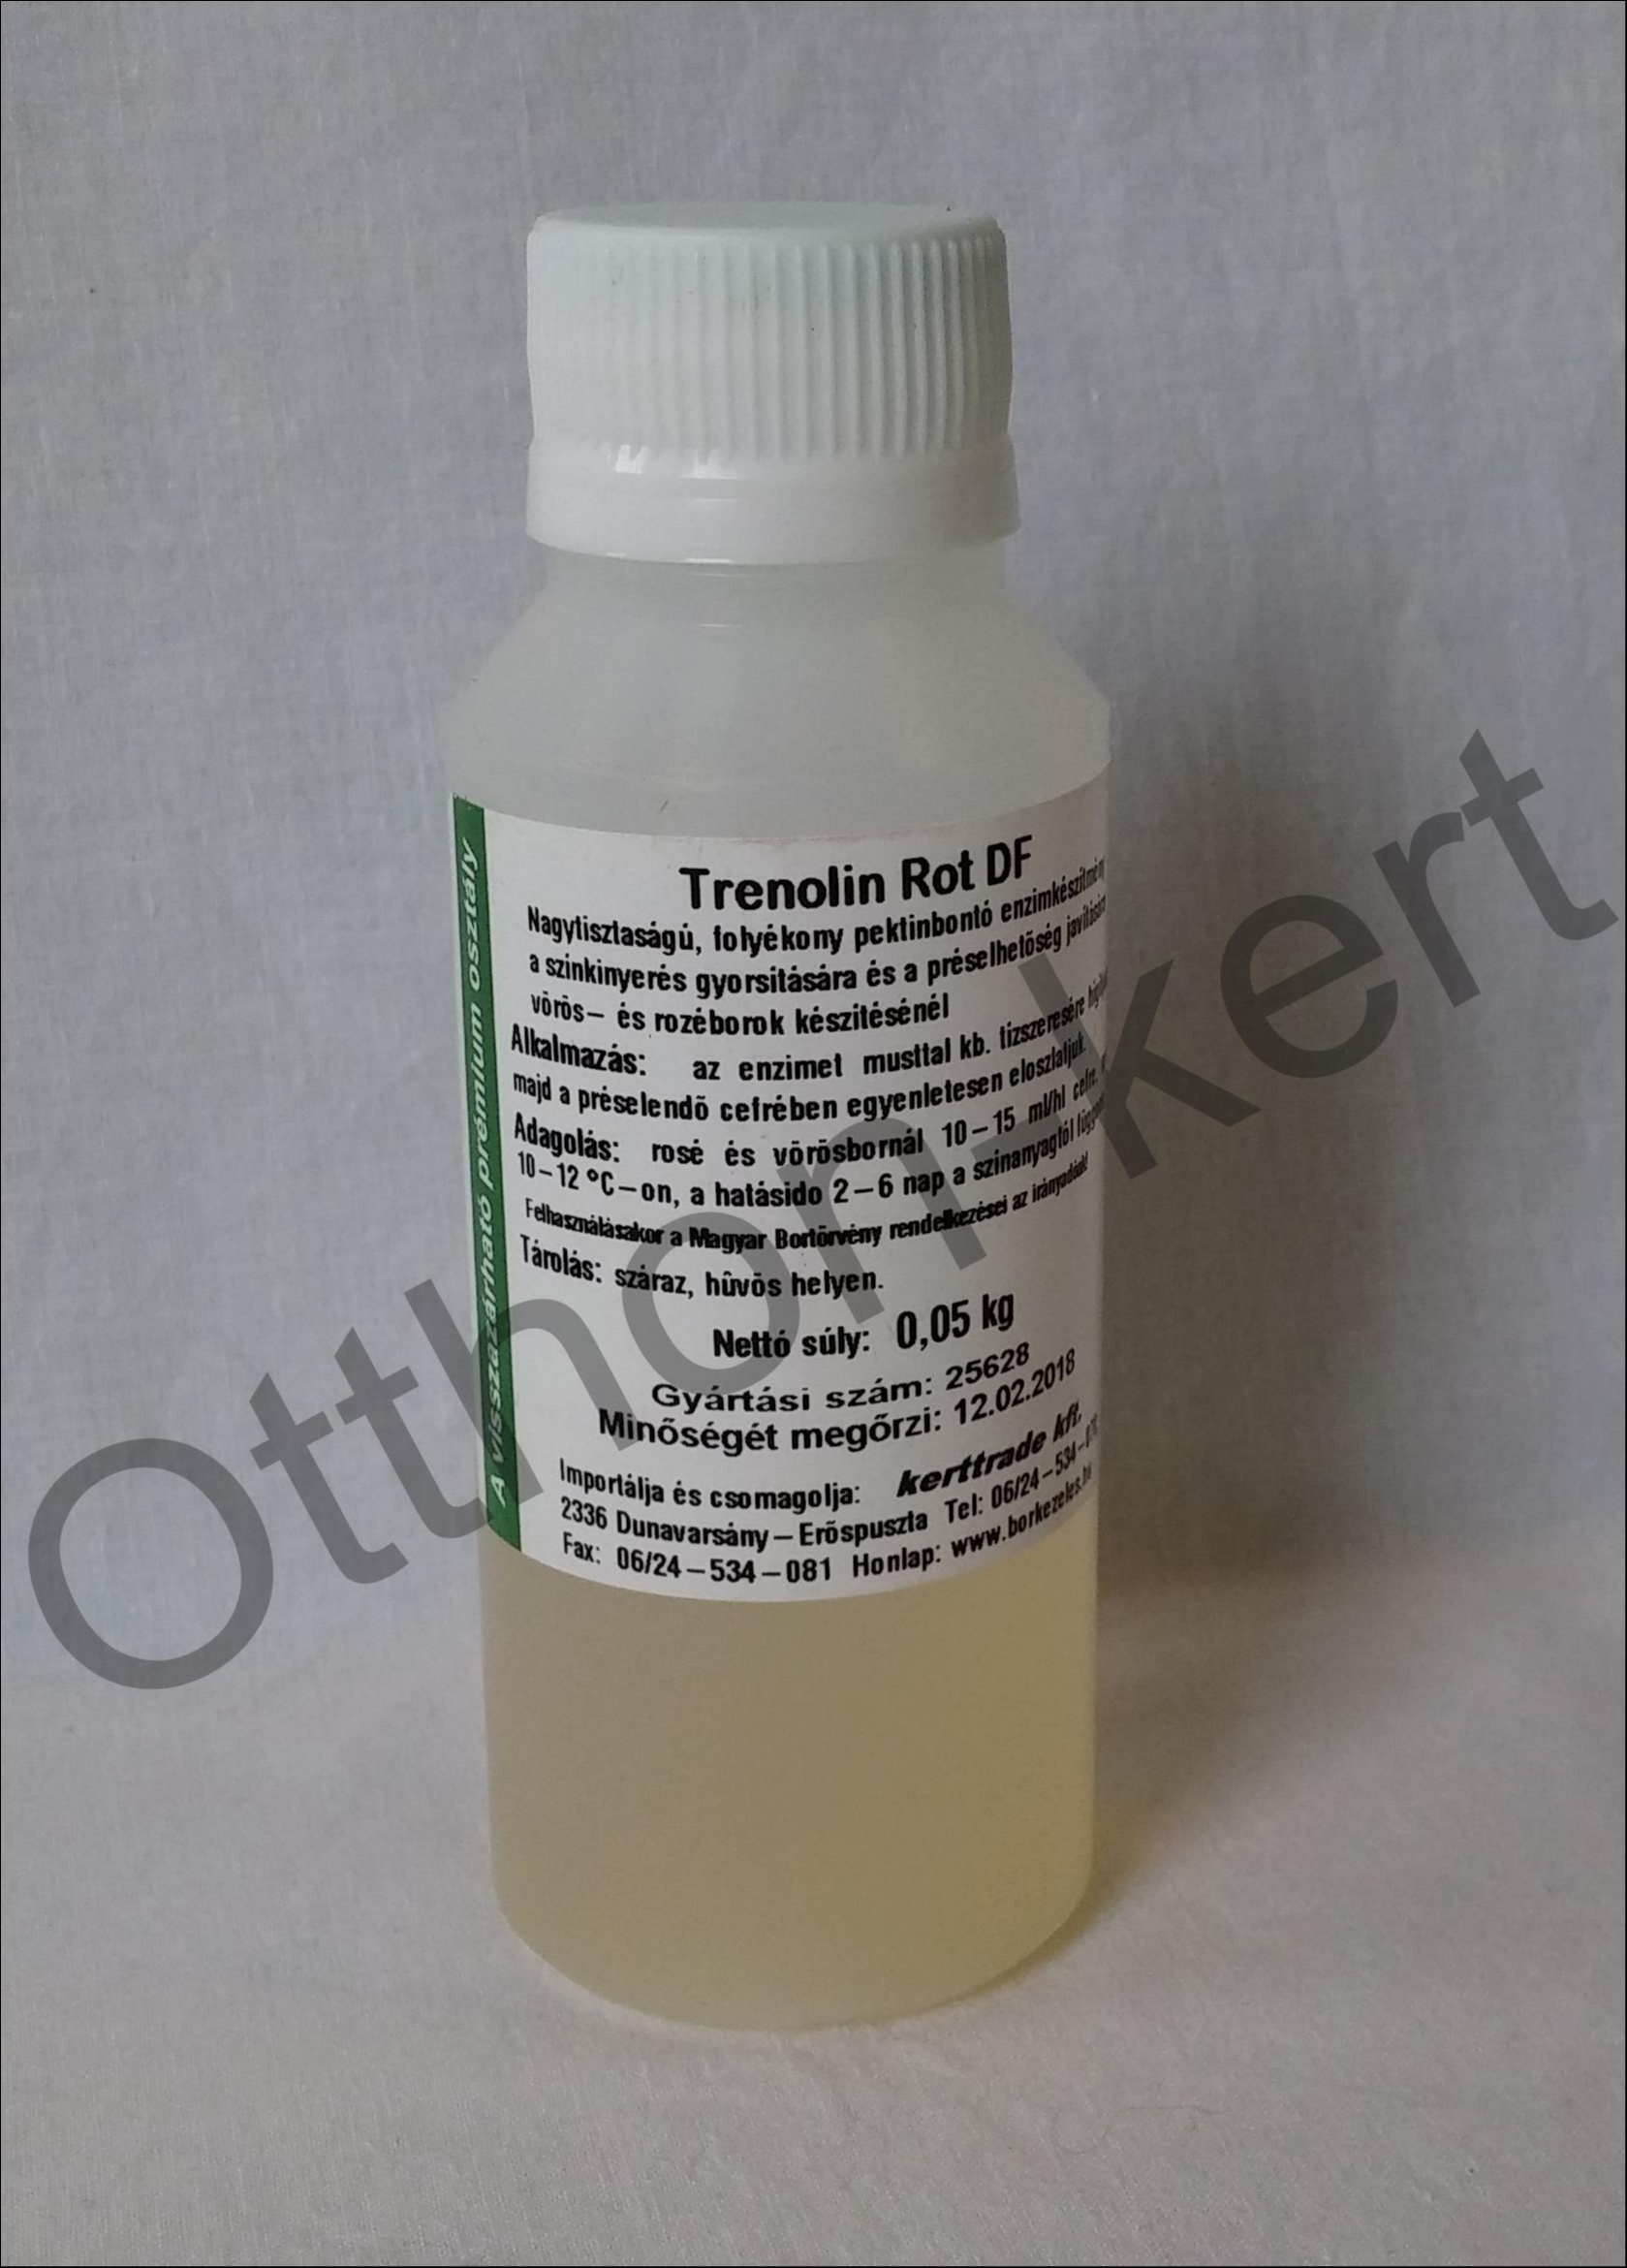 Trenolin Rot színkioldó enzim 50g